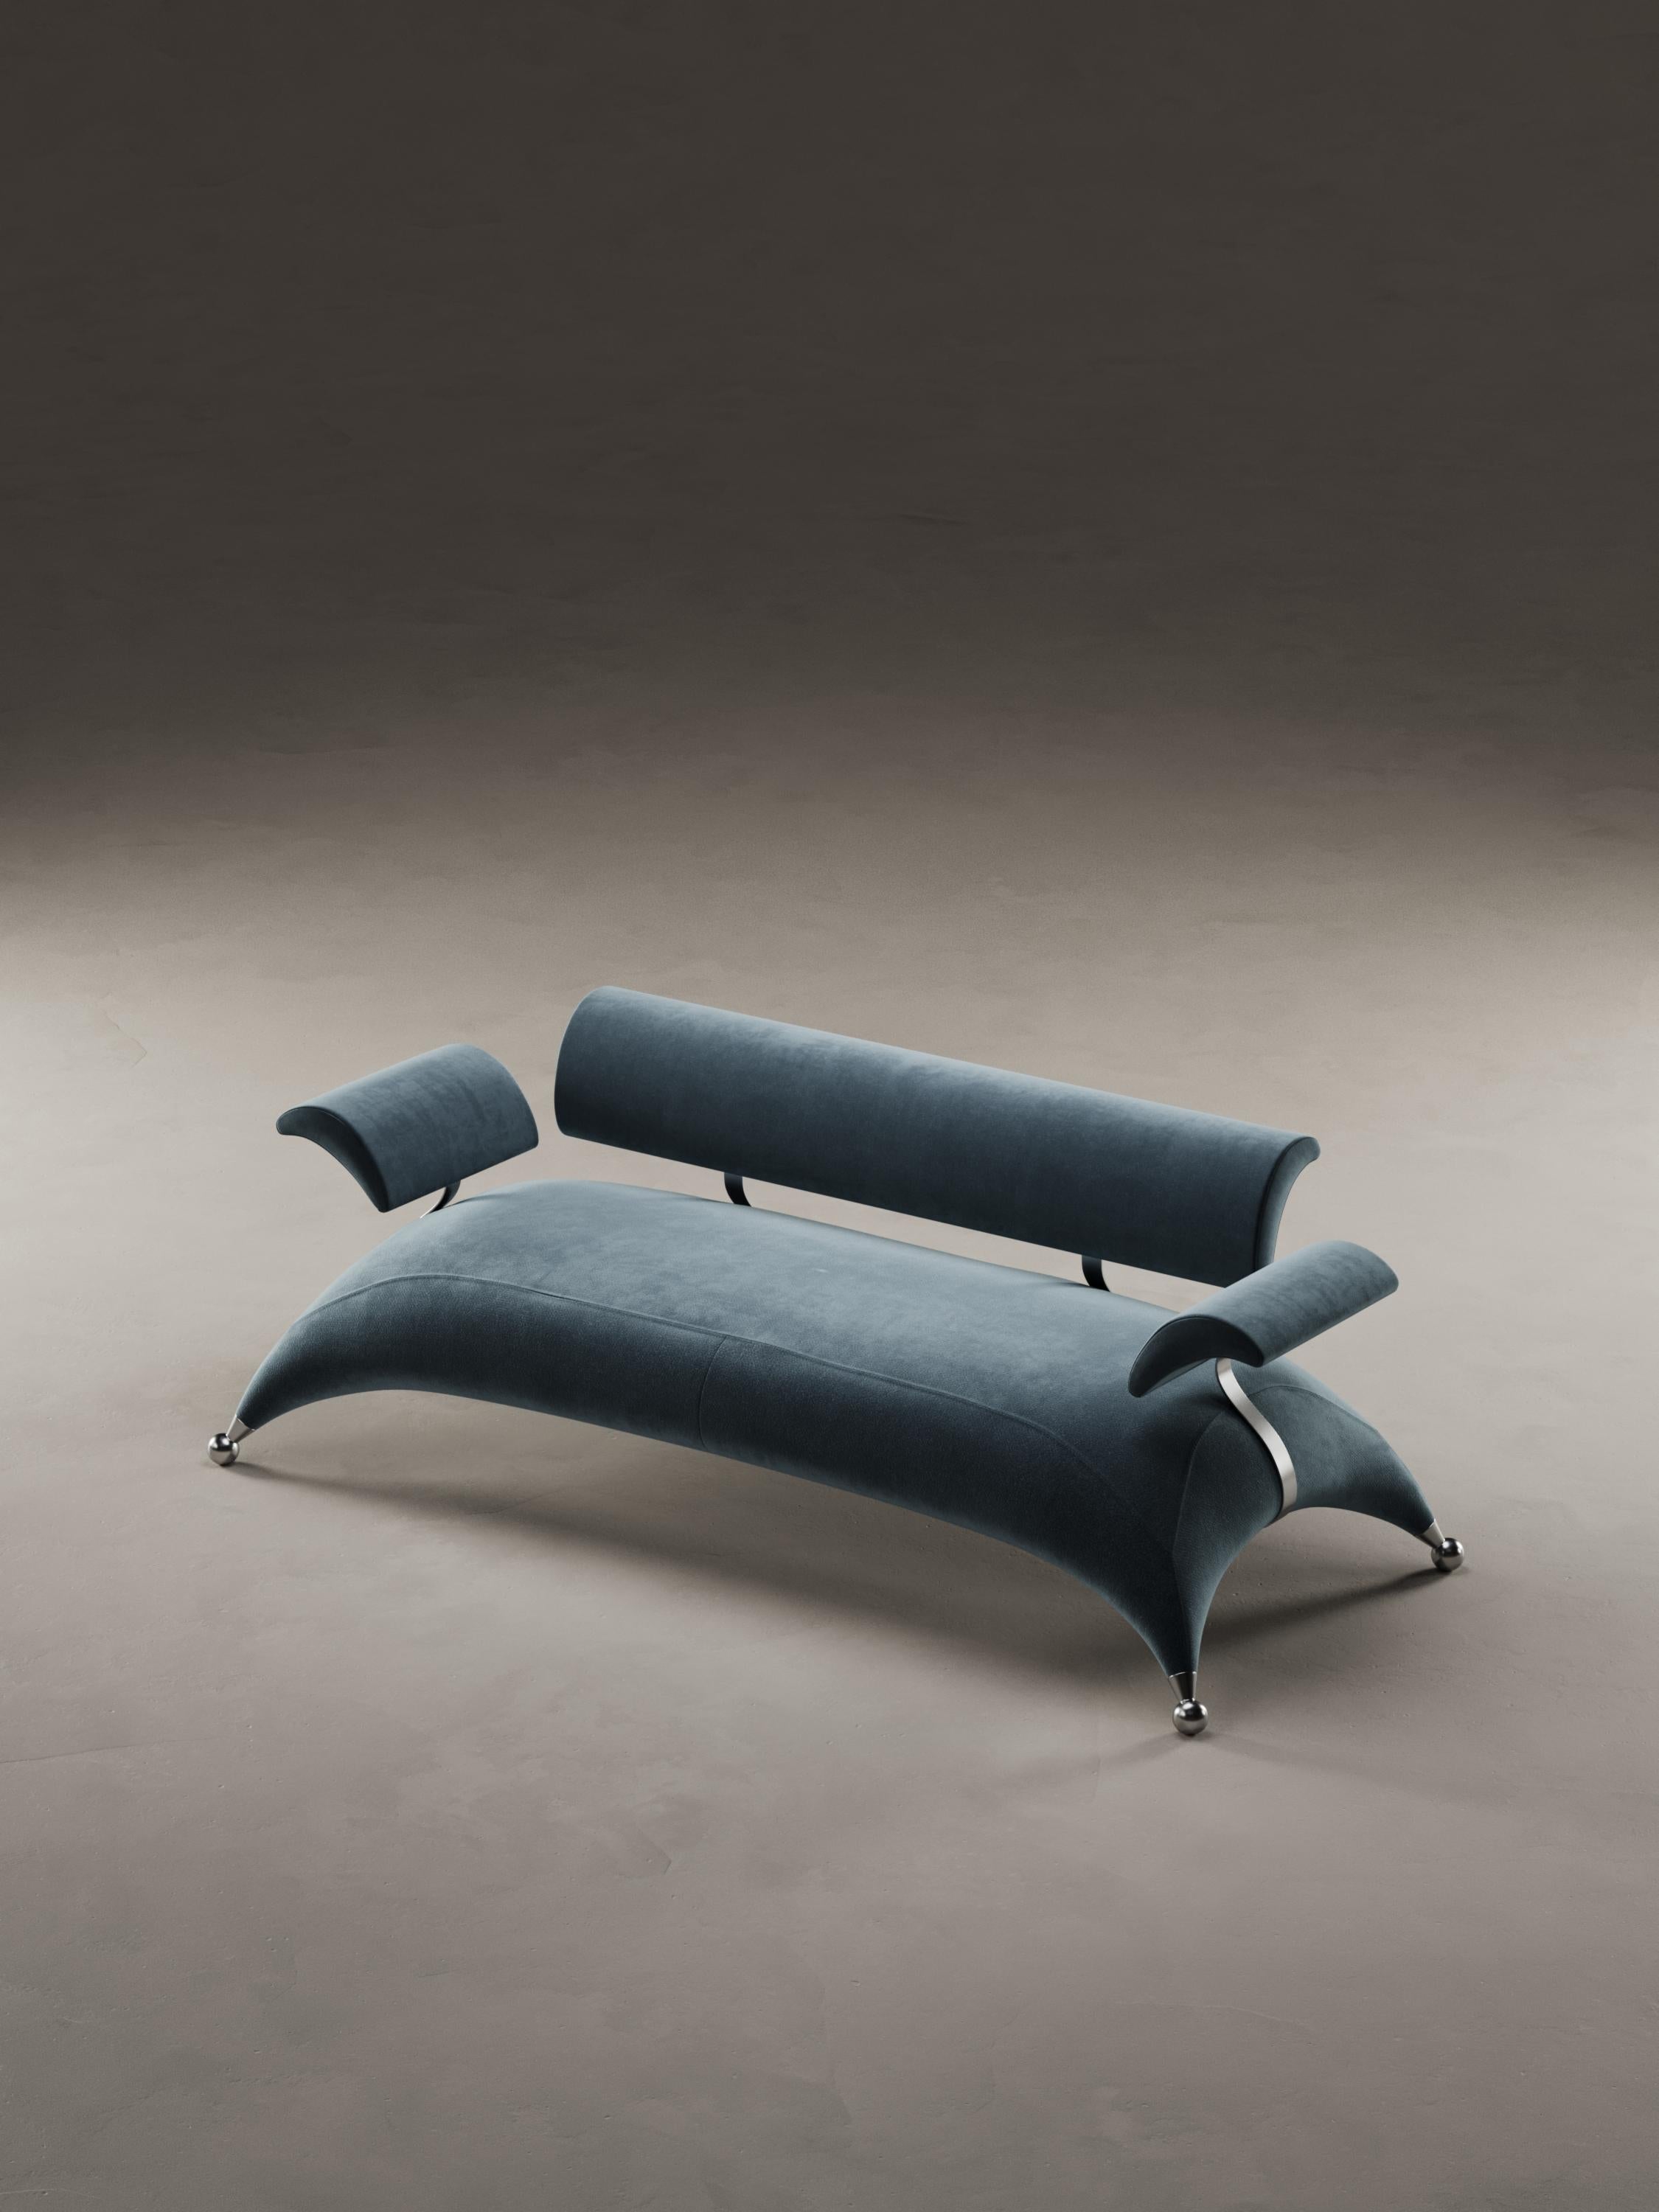 European Handmade Exceptional Design Sculptural Safari sofa For Sale